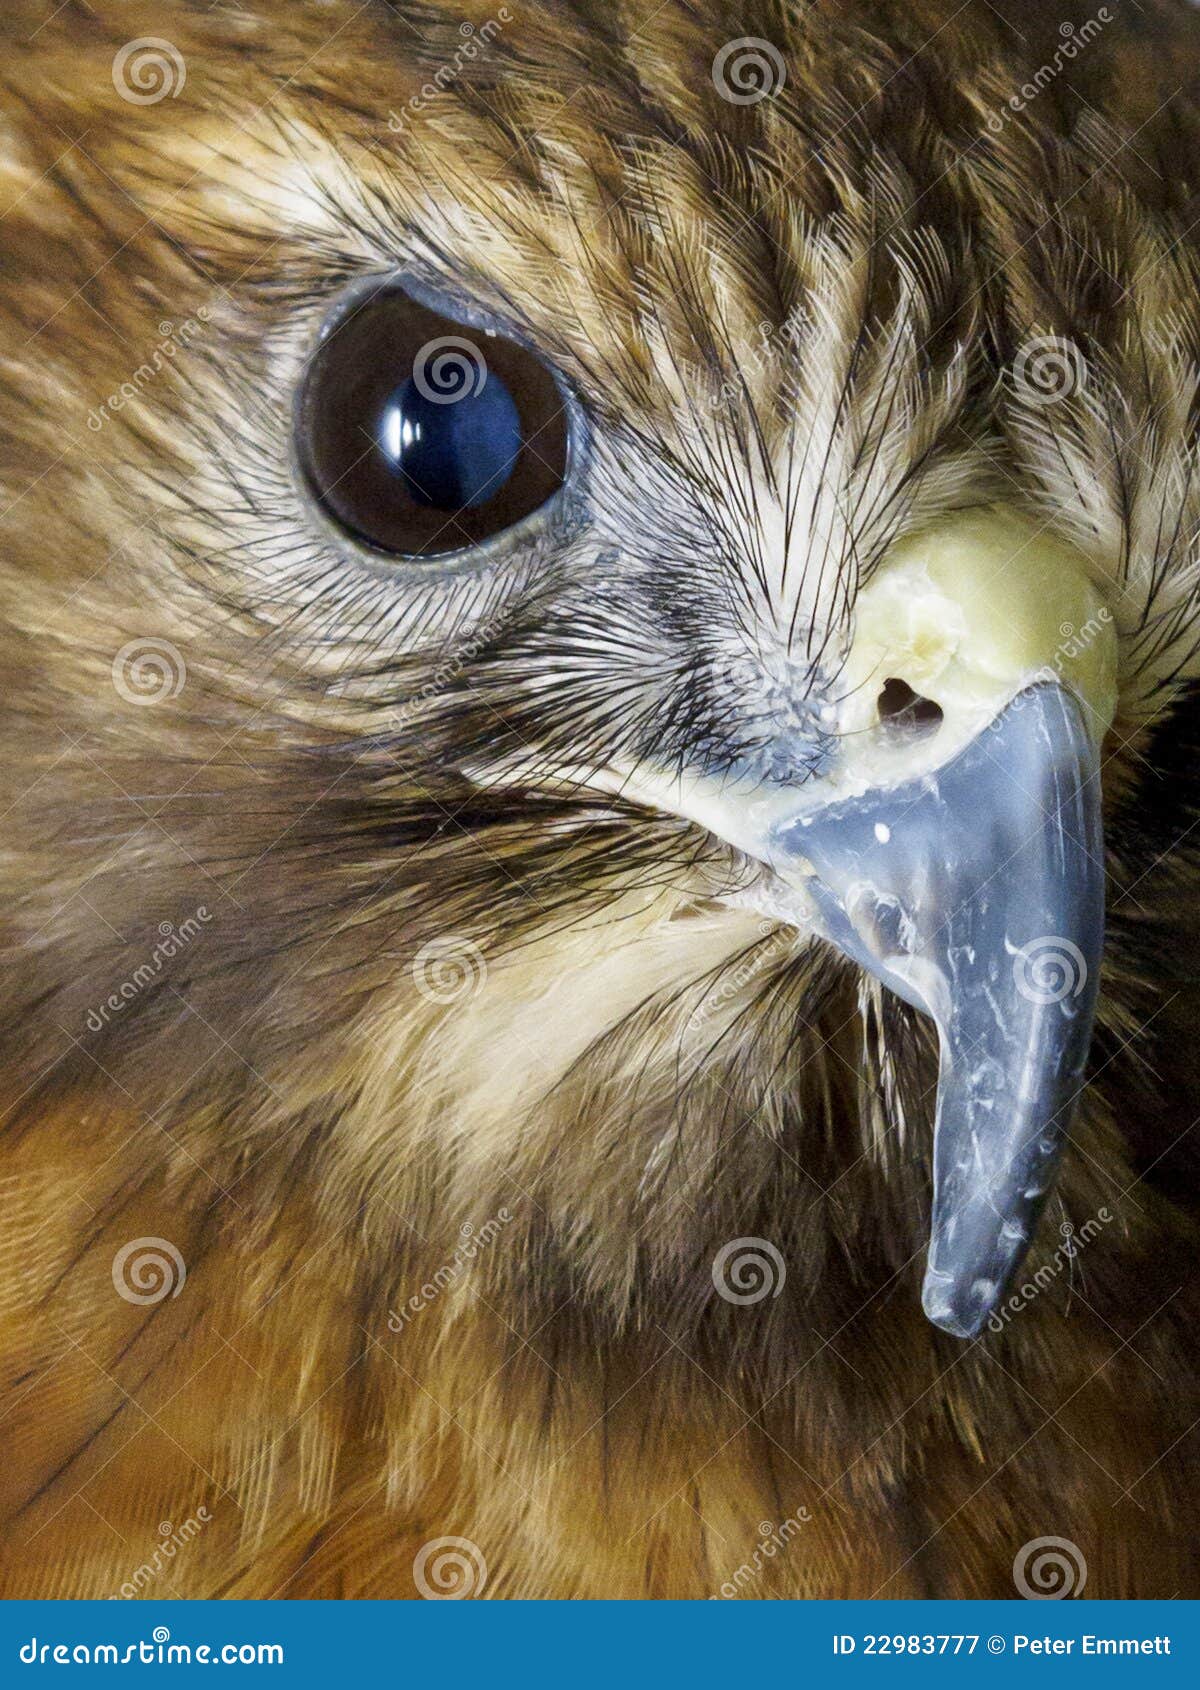 macro of bird of prey eye and beak